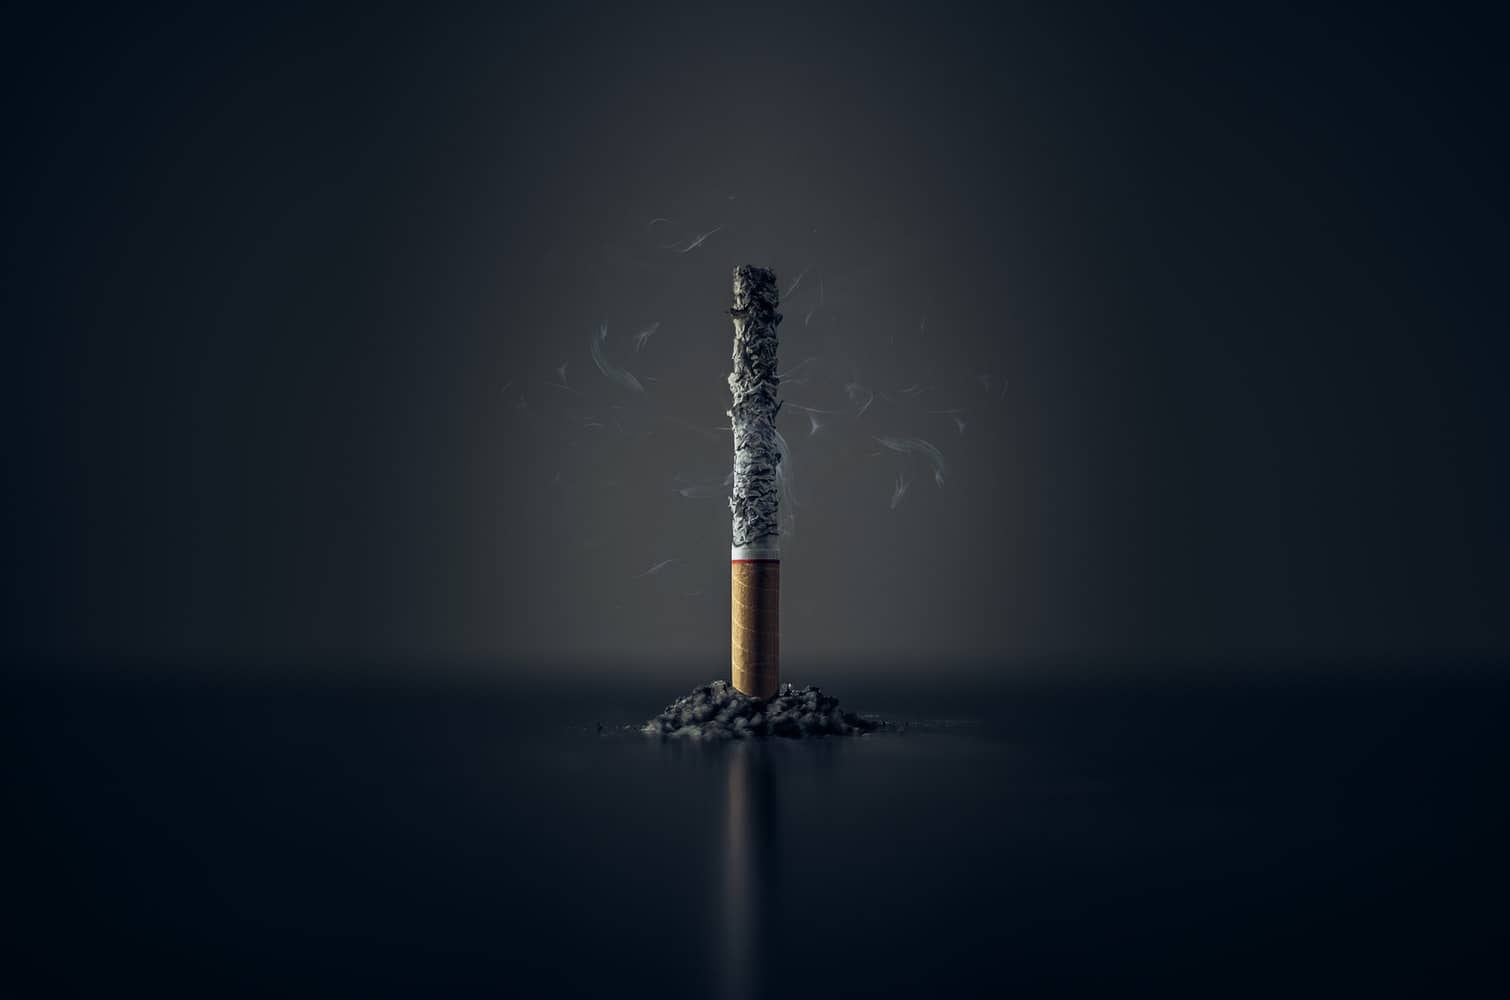 Burnt down cigarette